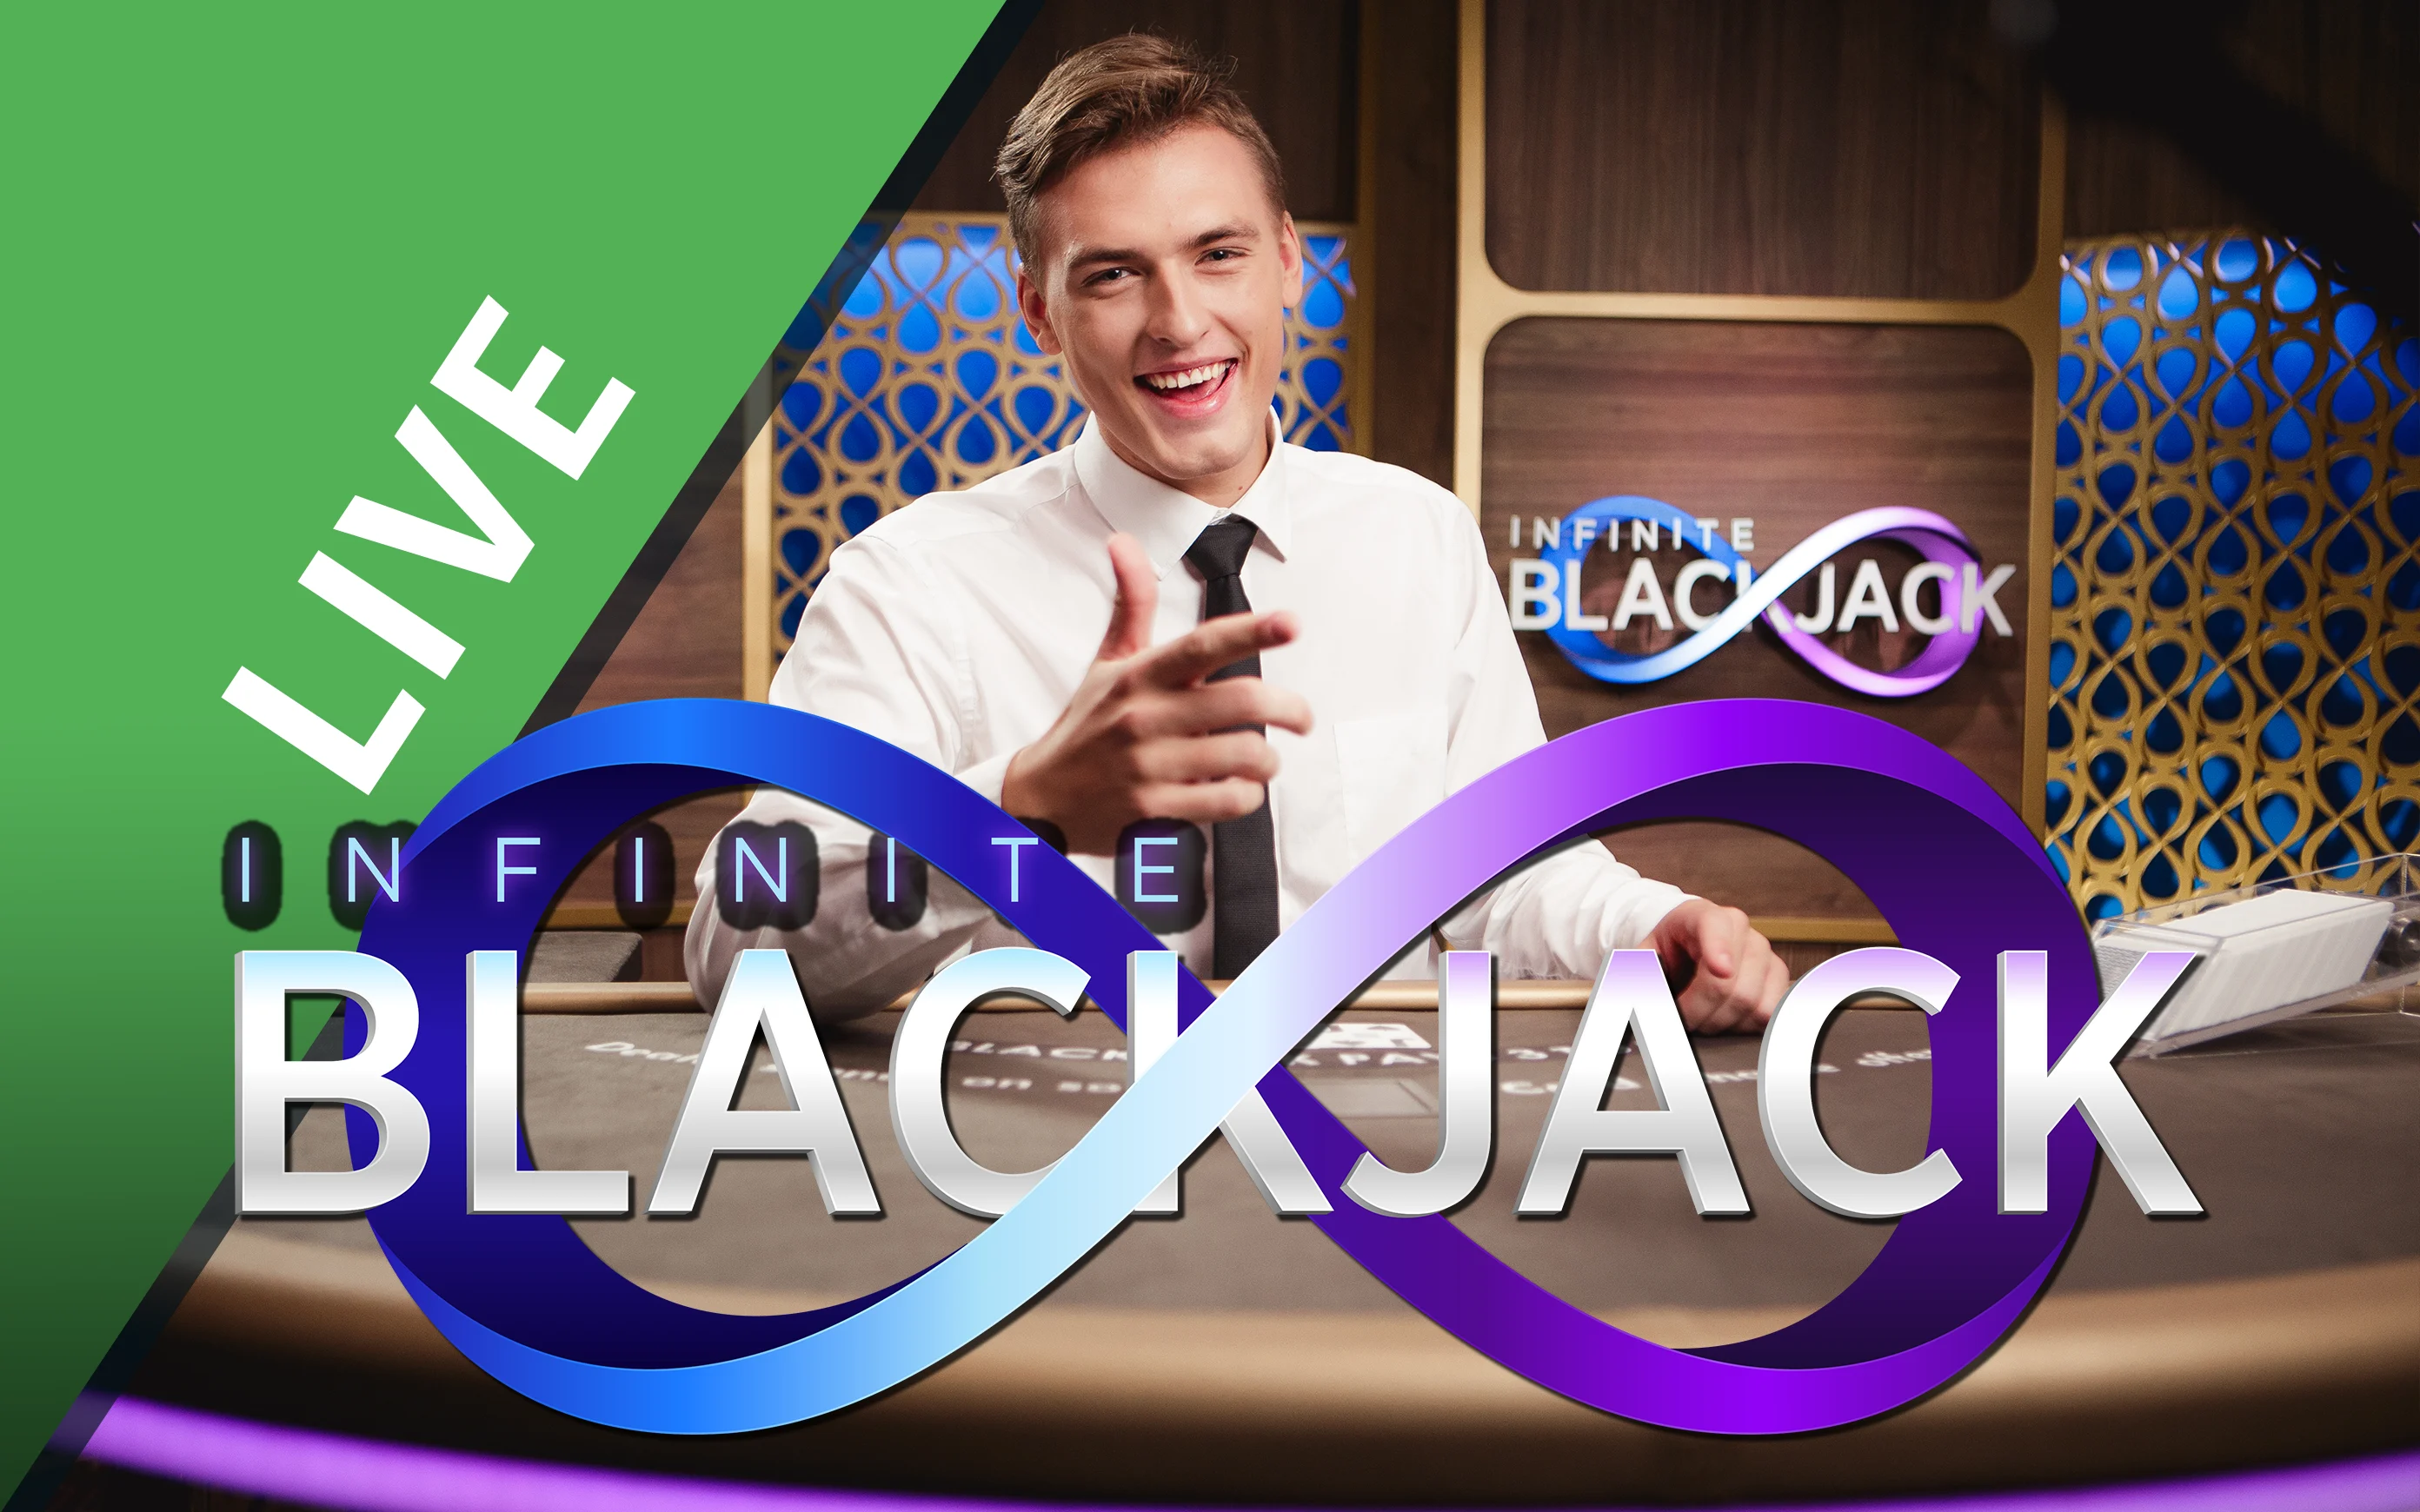 Chơi Infinite Blackjack trên sòng bạc trực tuyến Starcasino.be